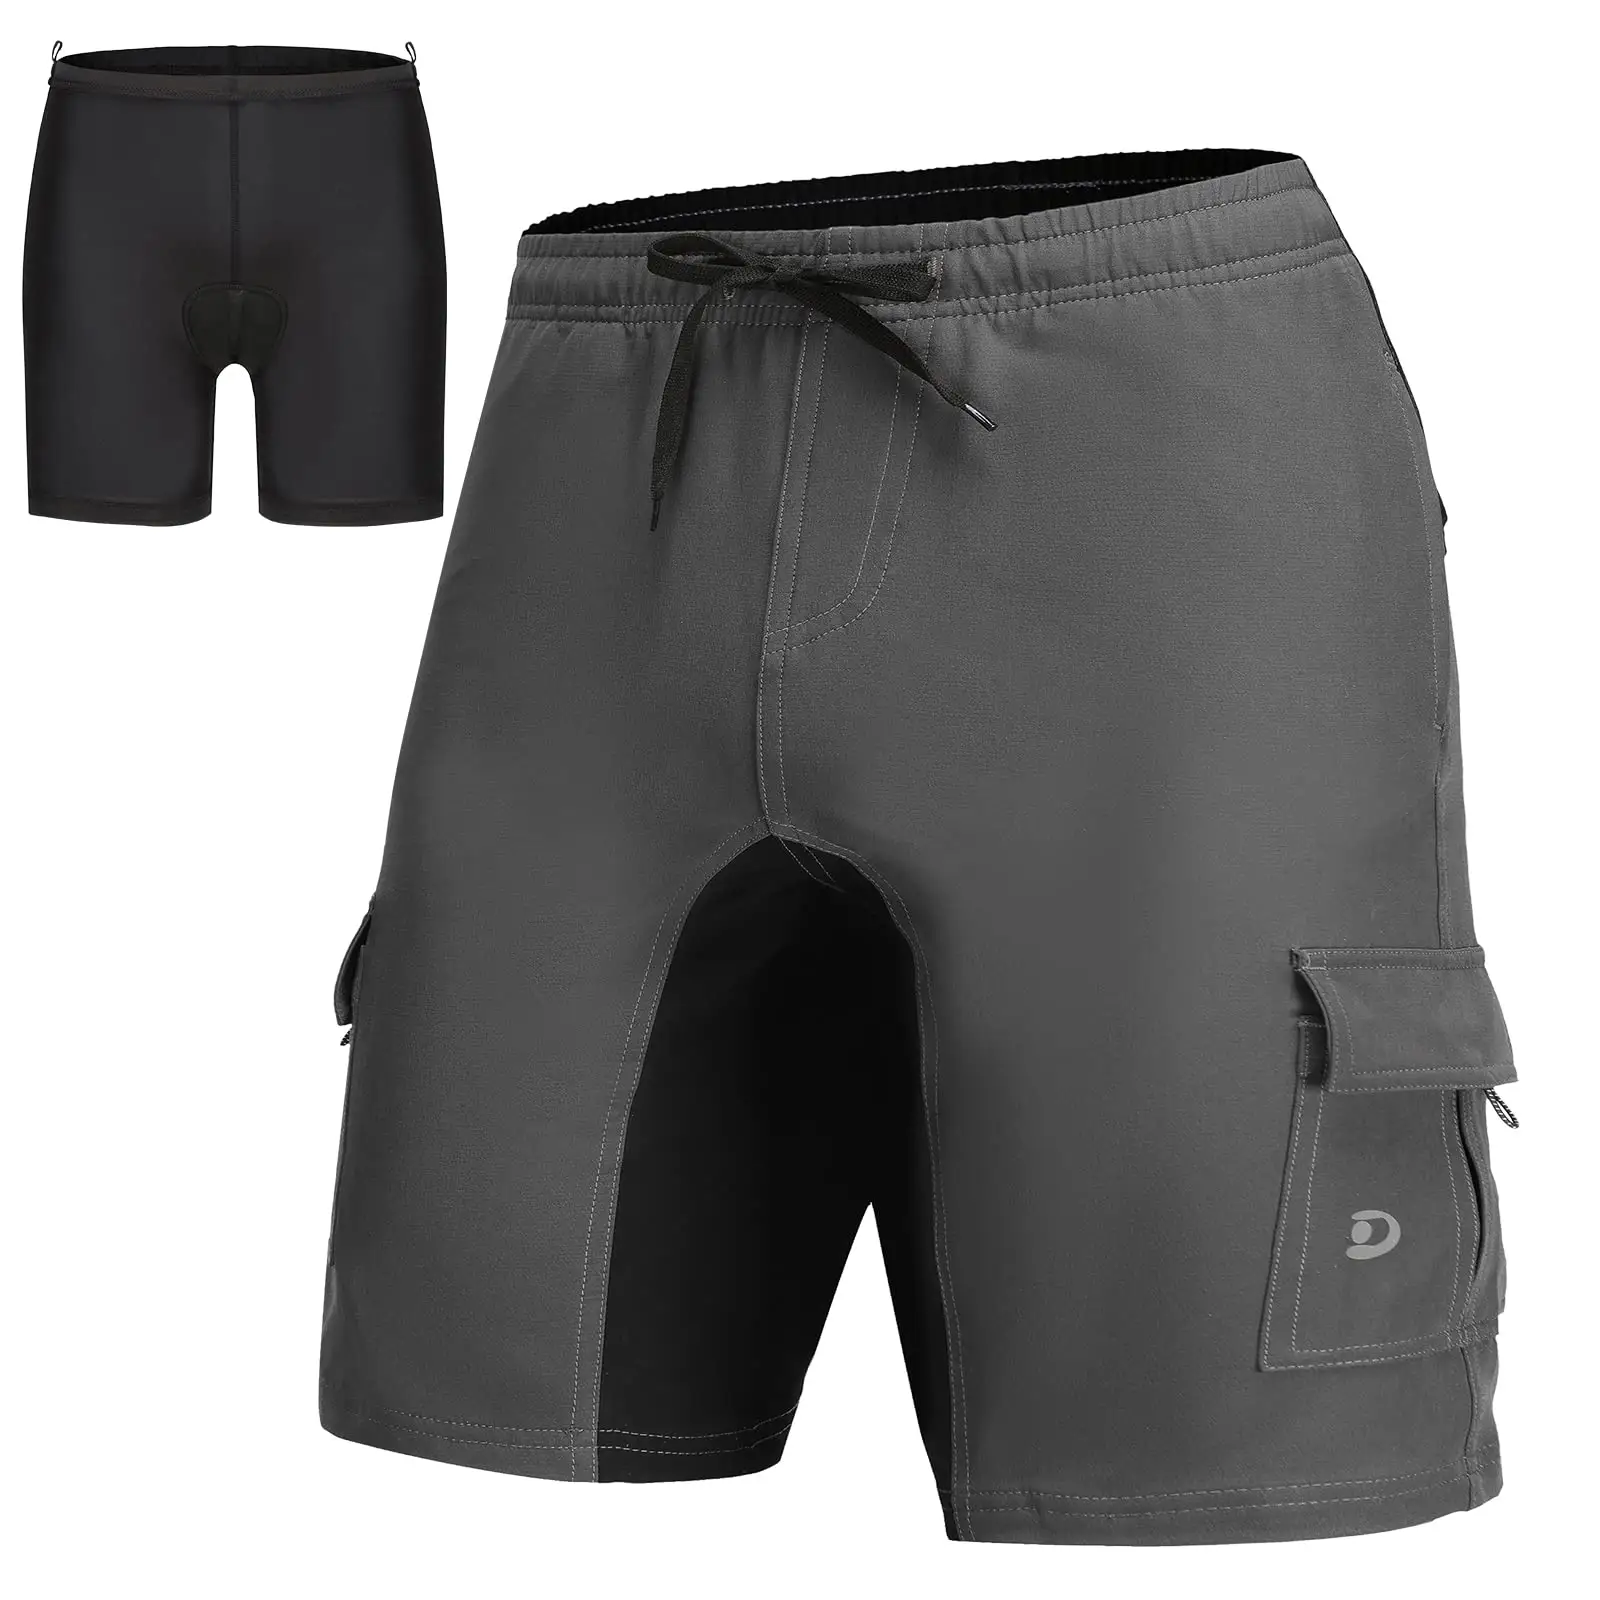 Customizable Road Bike Race Men Cycling Shorts with Italian Padding Sublimation Pants Multi-fabric stitching